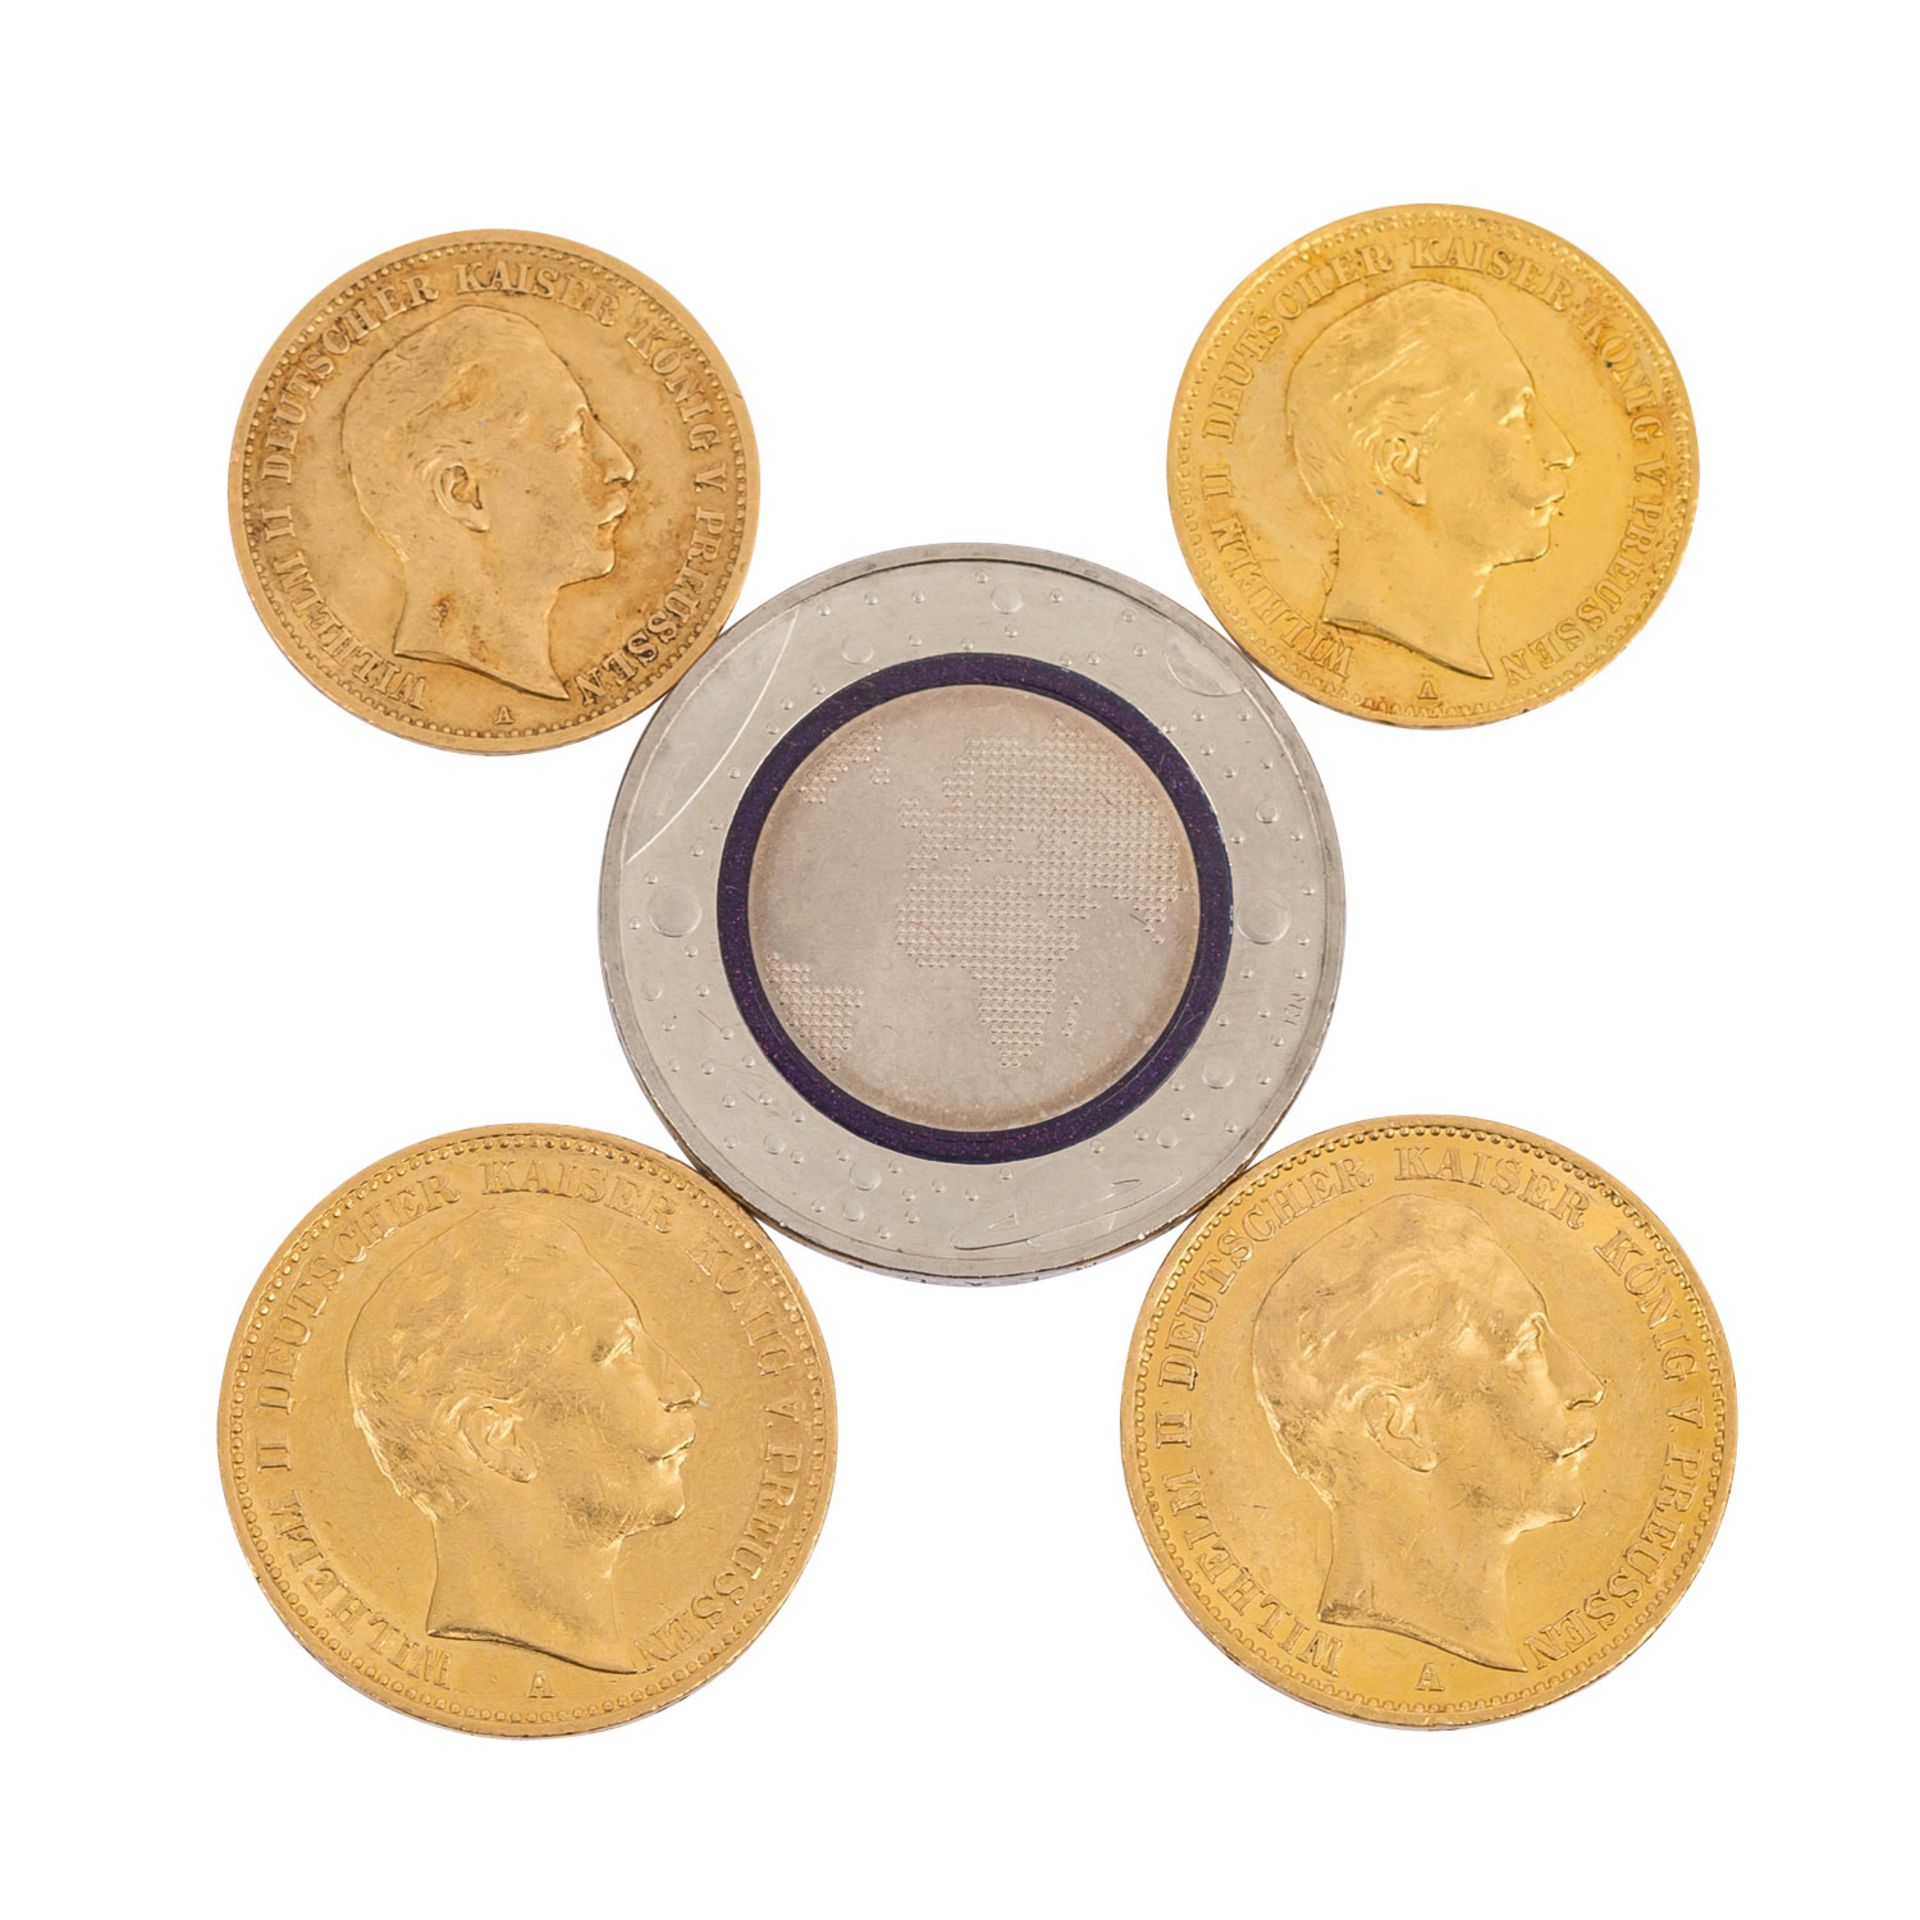 Preussen/GOLD - 2 x 20 Goldmark und 2 x 10 Goldmark,